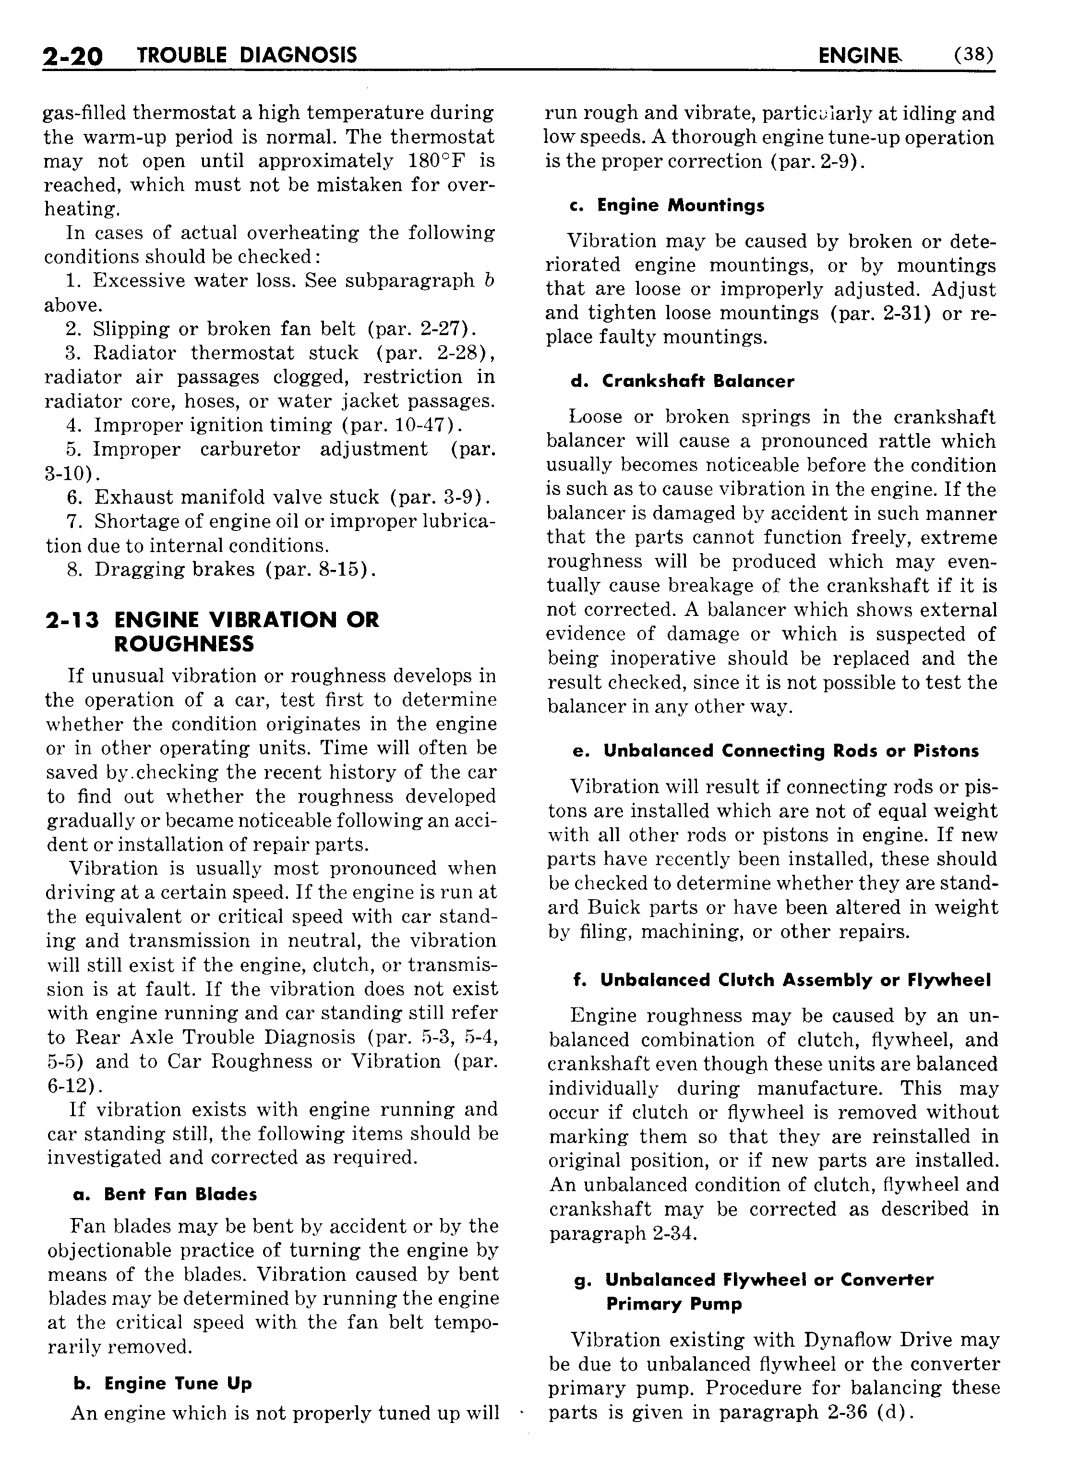 n_03 1951 Buick Shop Manual - Engine-020-020.jpg